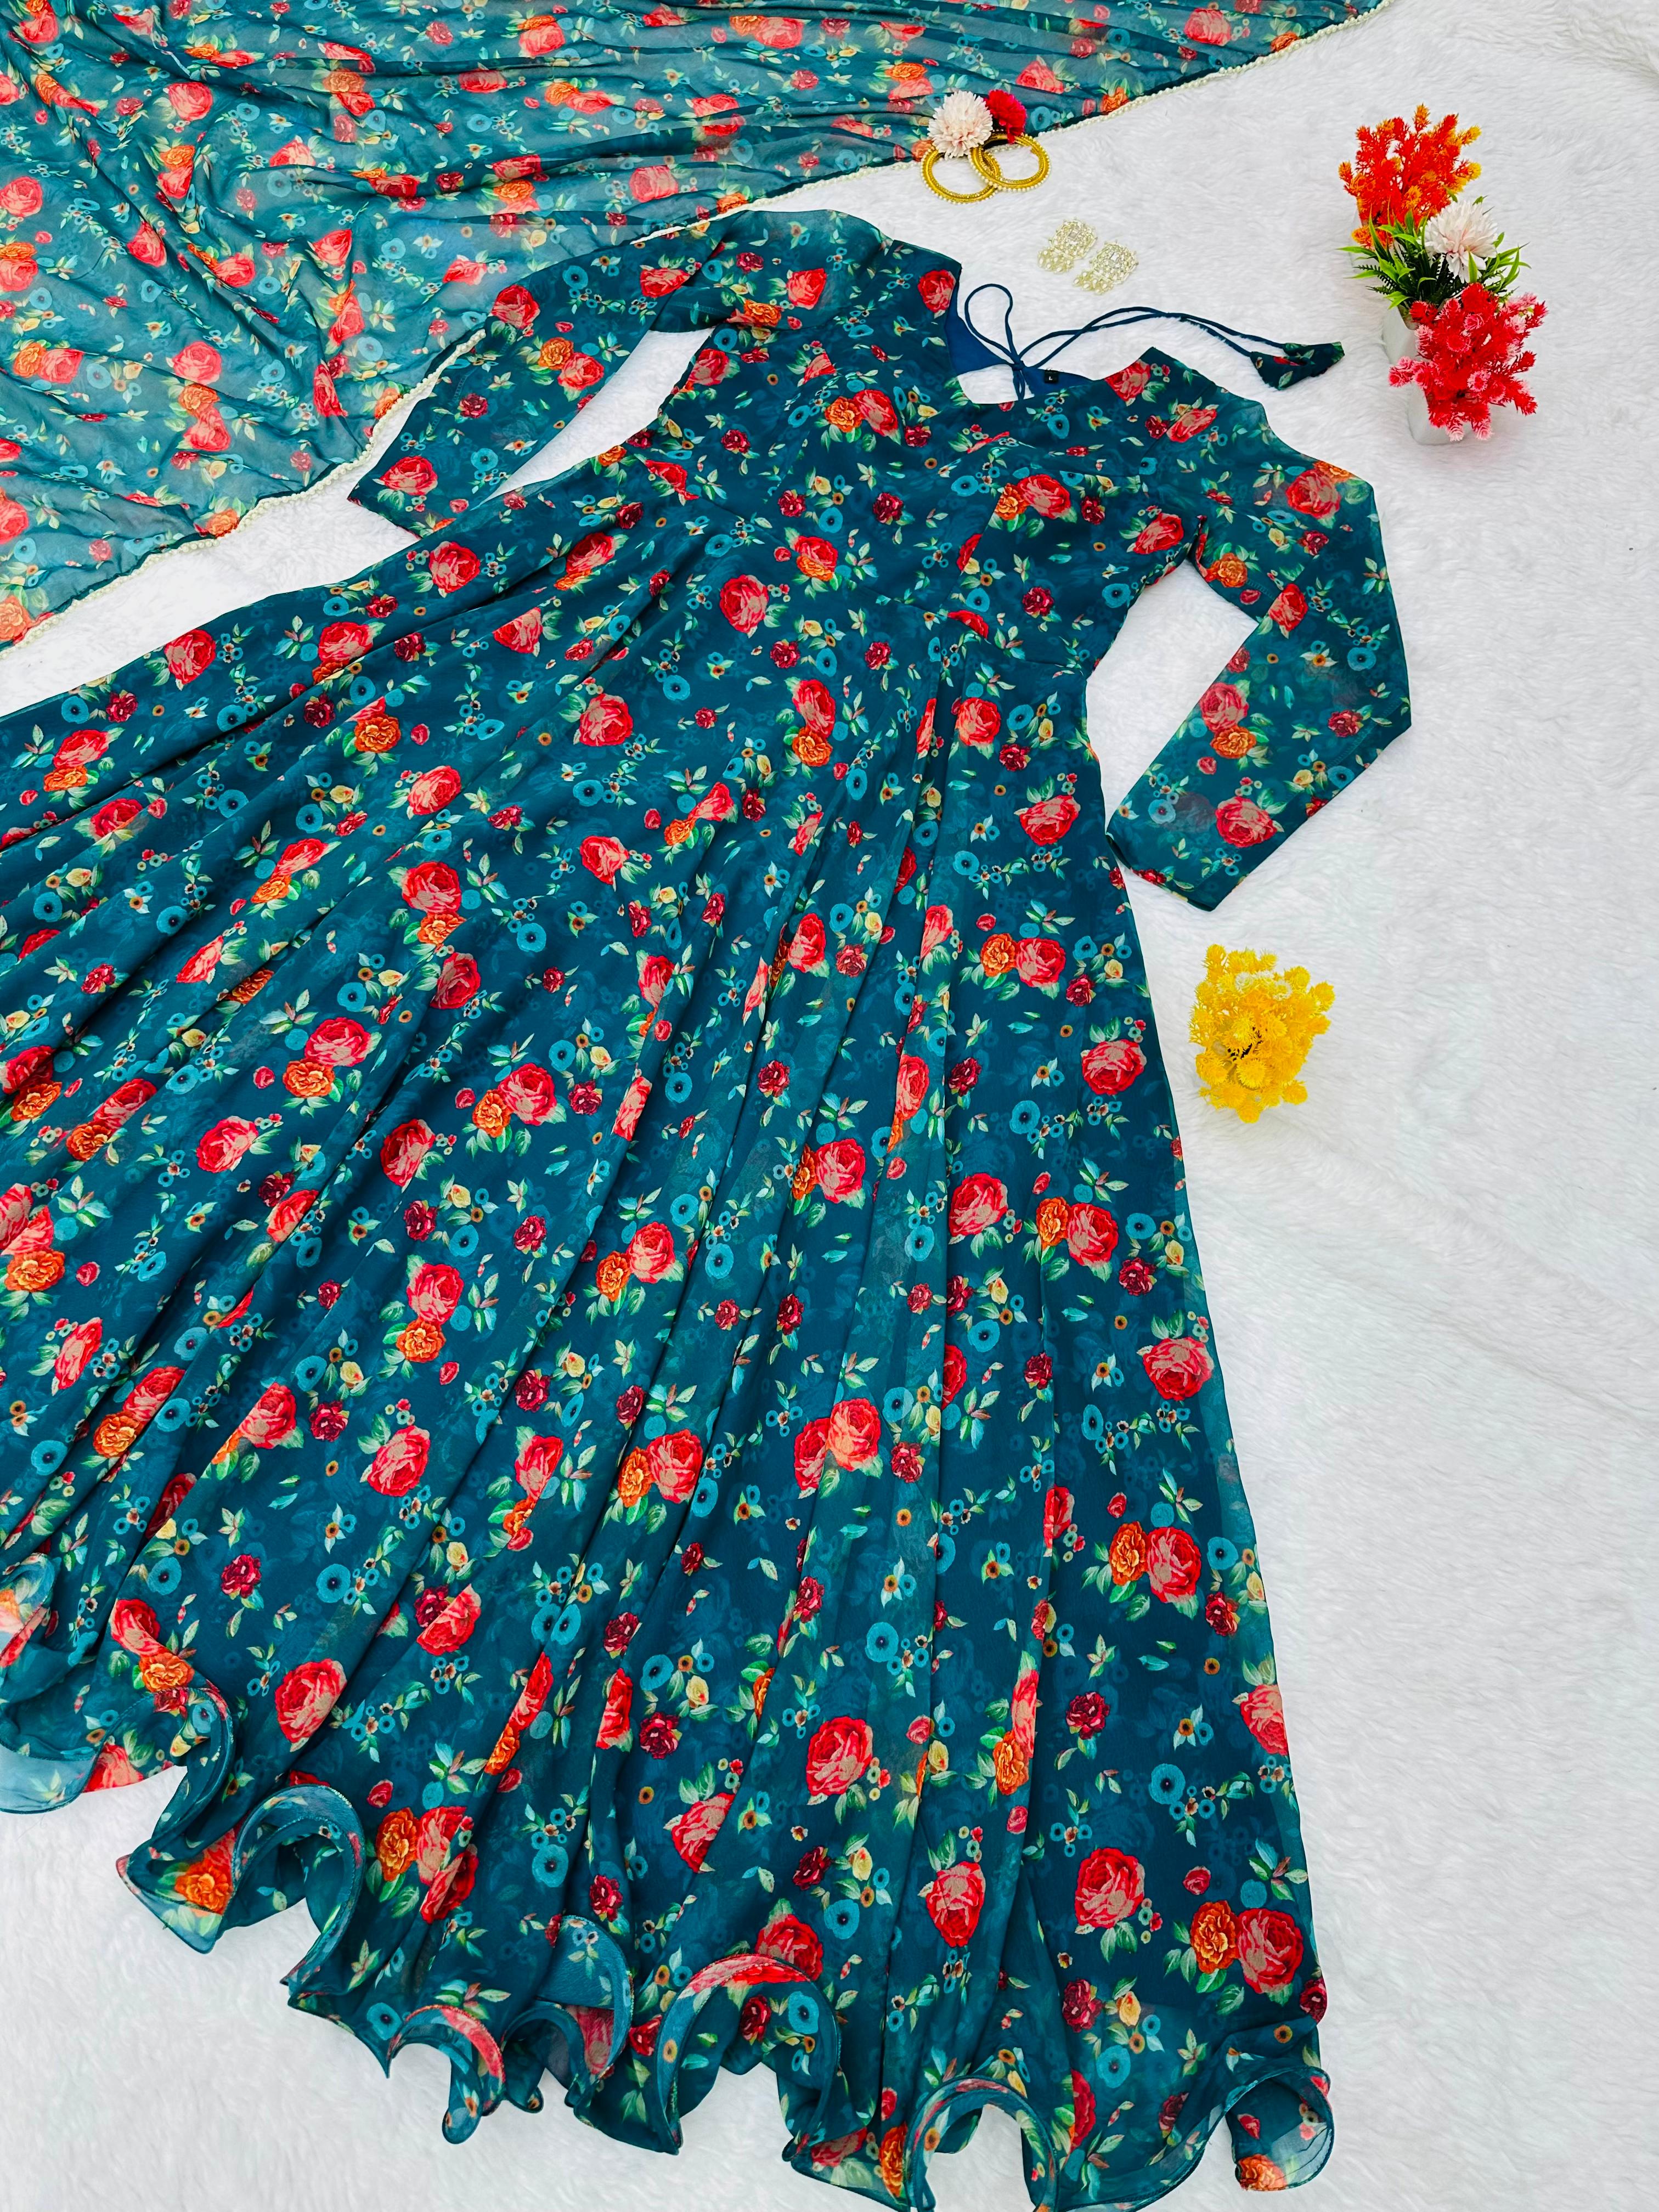 Presenting Teal Blue Color Digital Print Gown